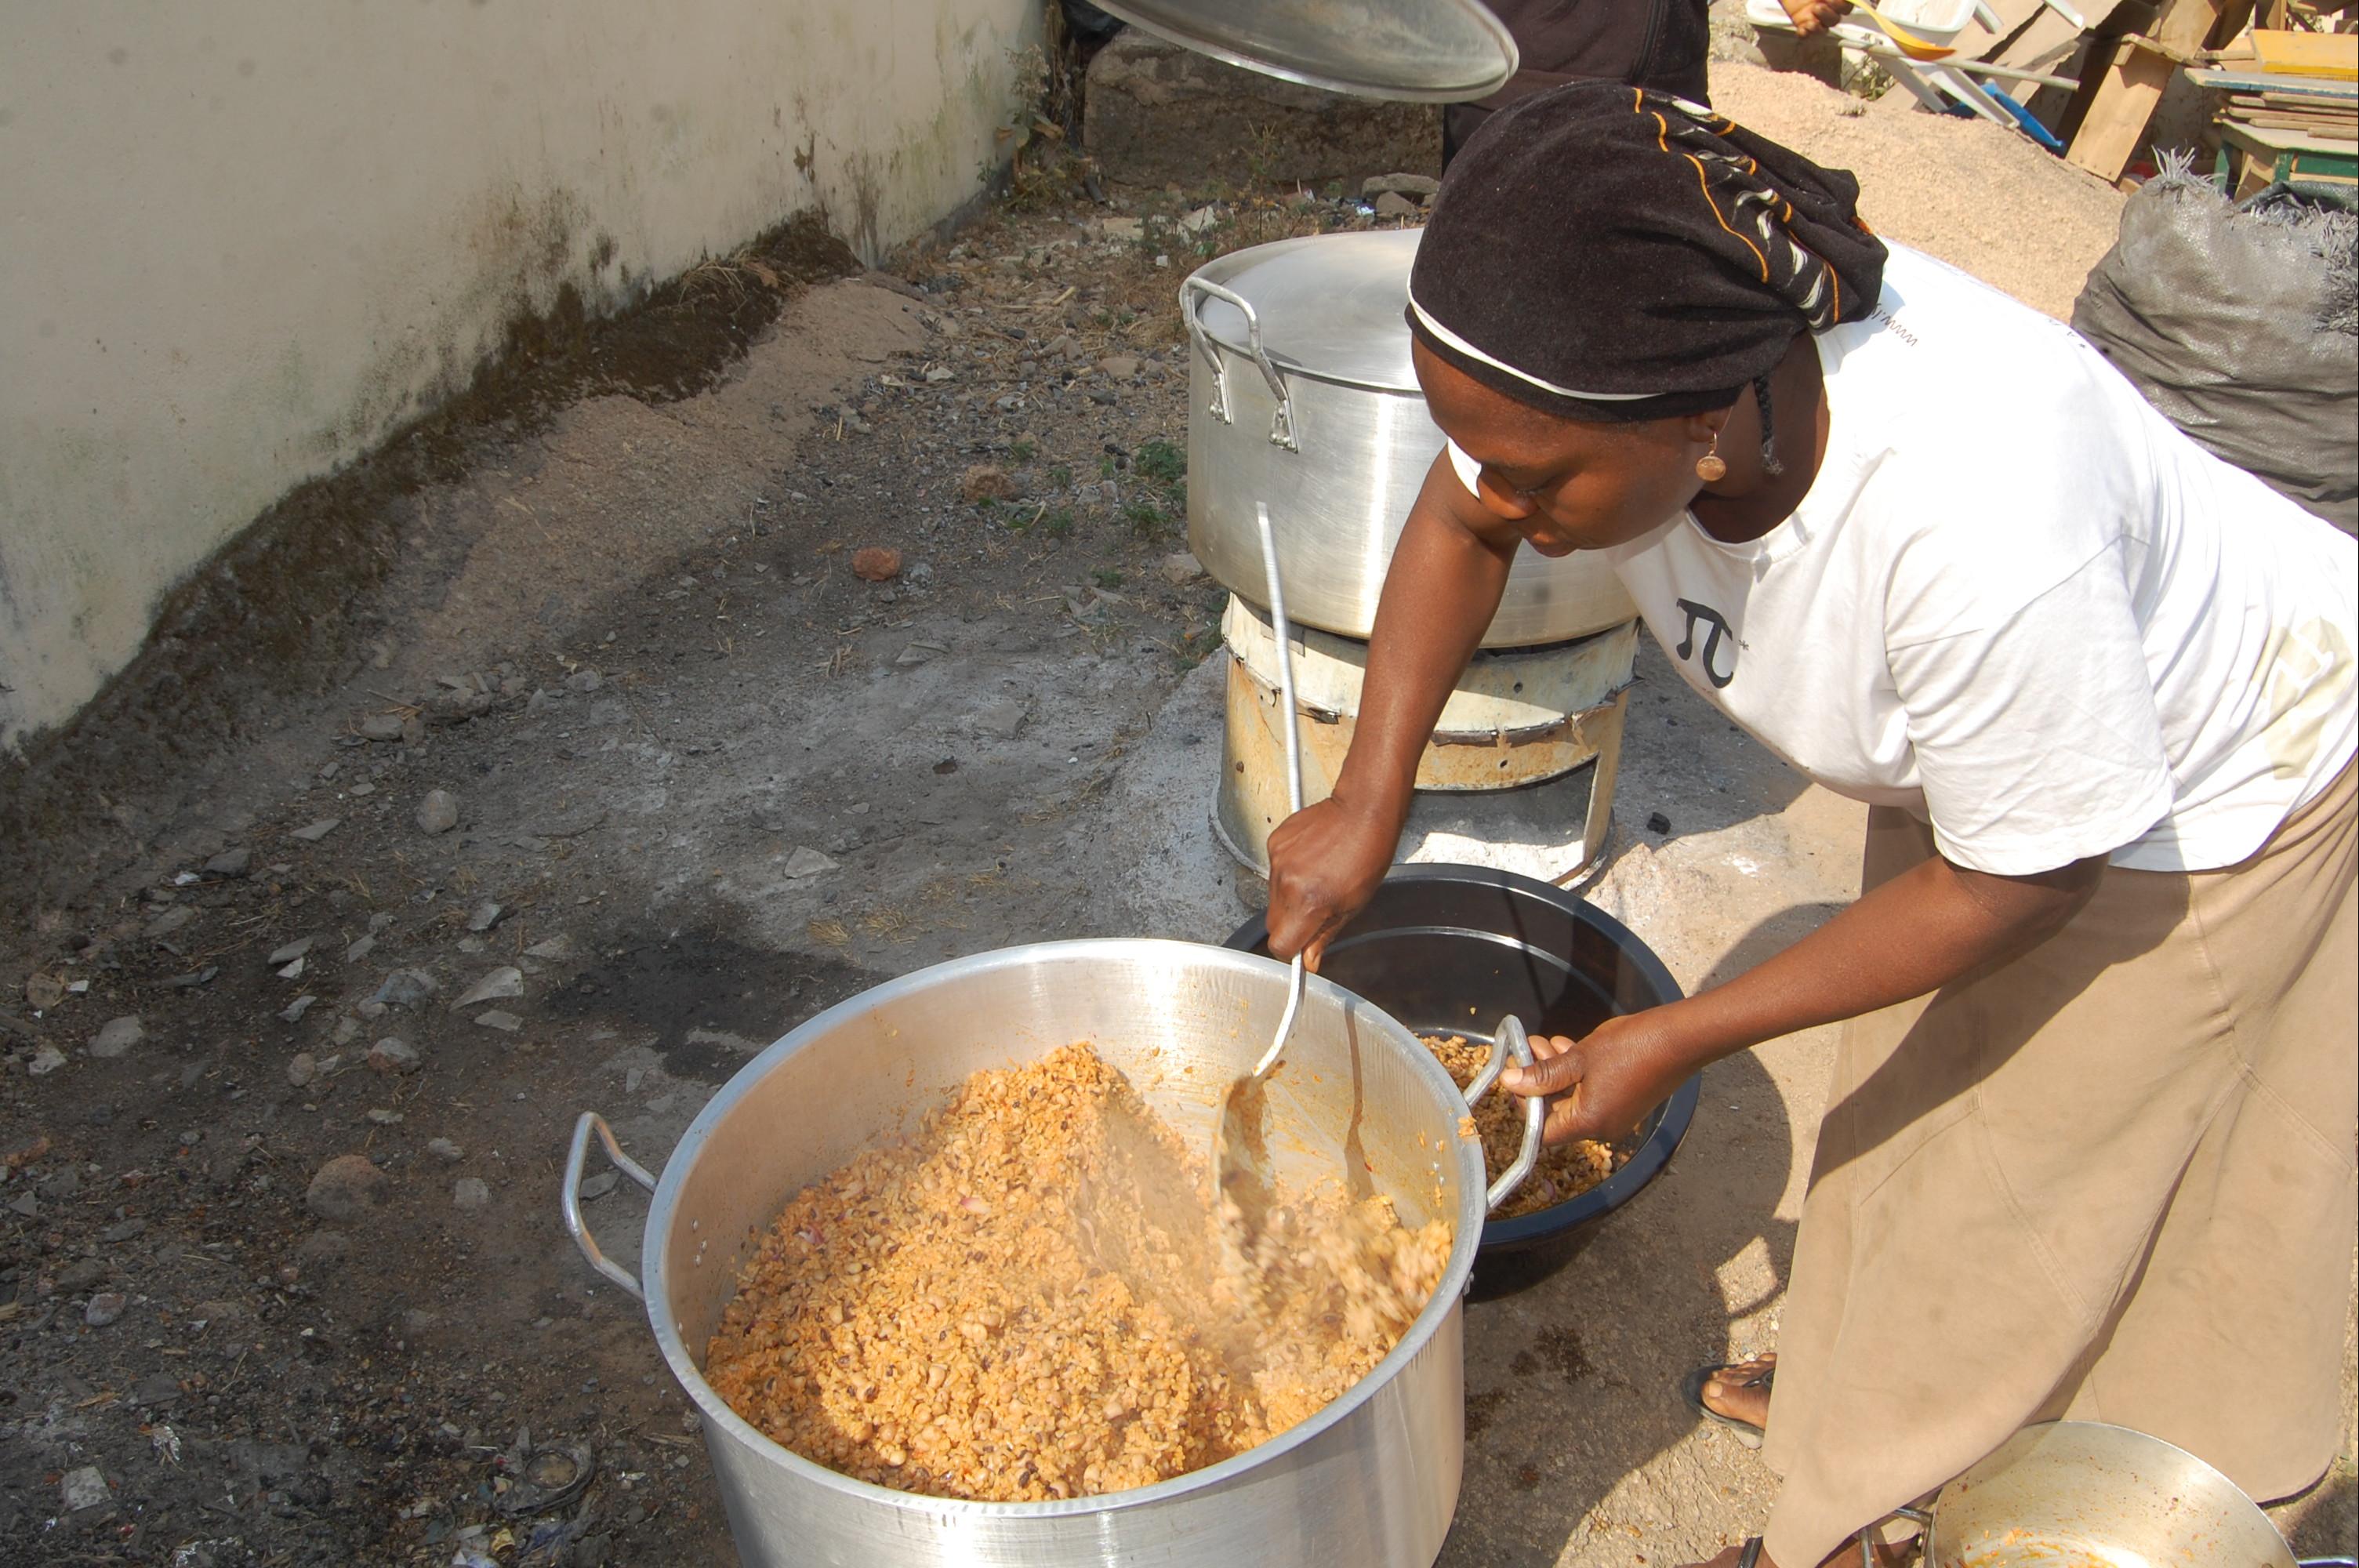 Feeding Program Amina Zwindila Foundation School NIgeria